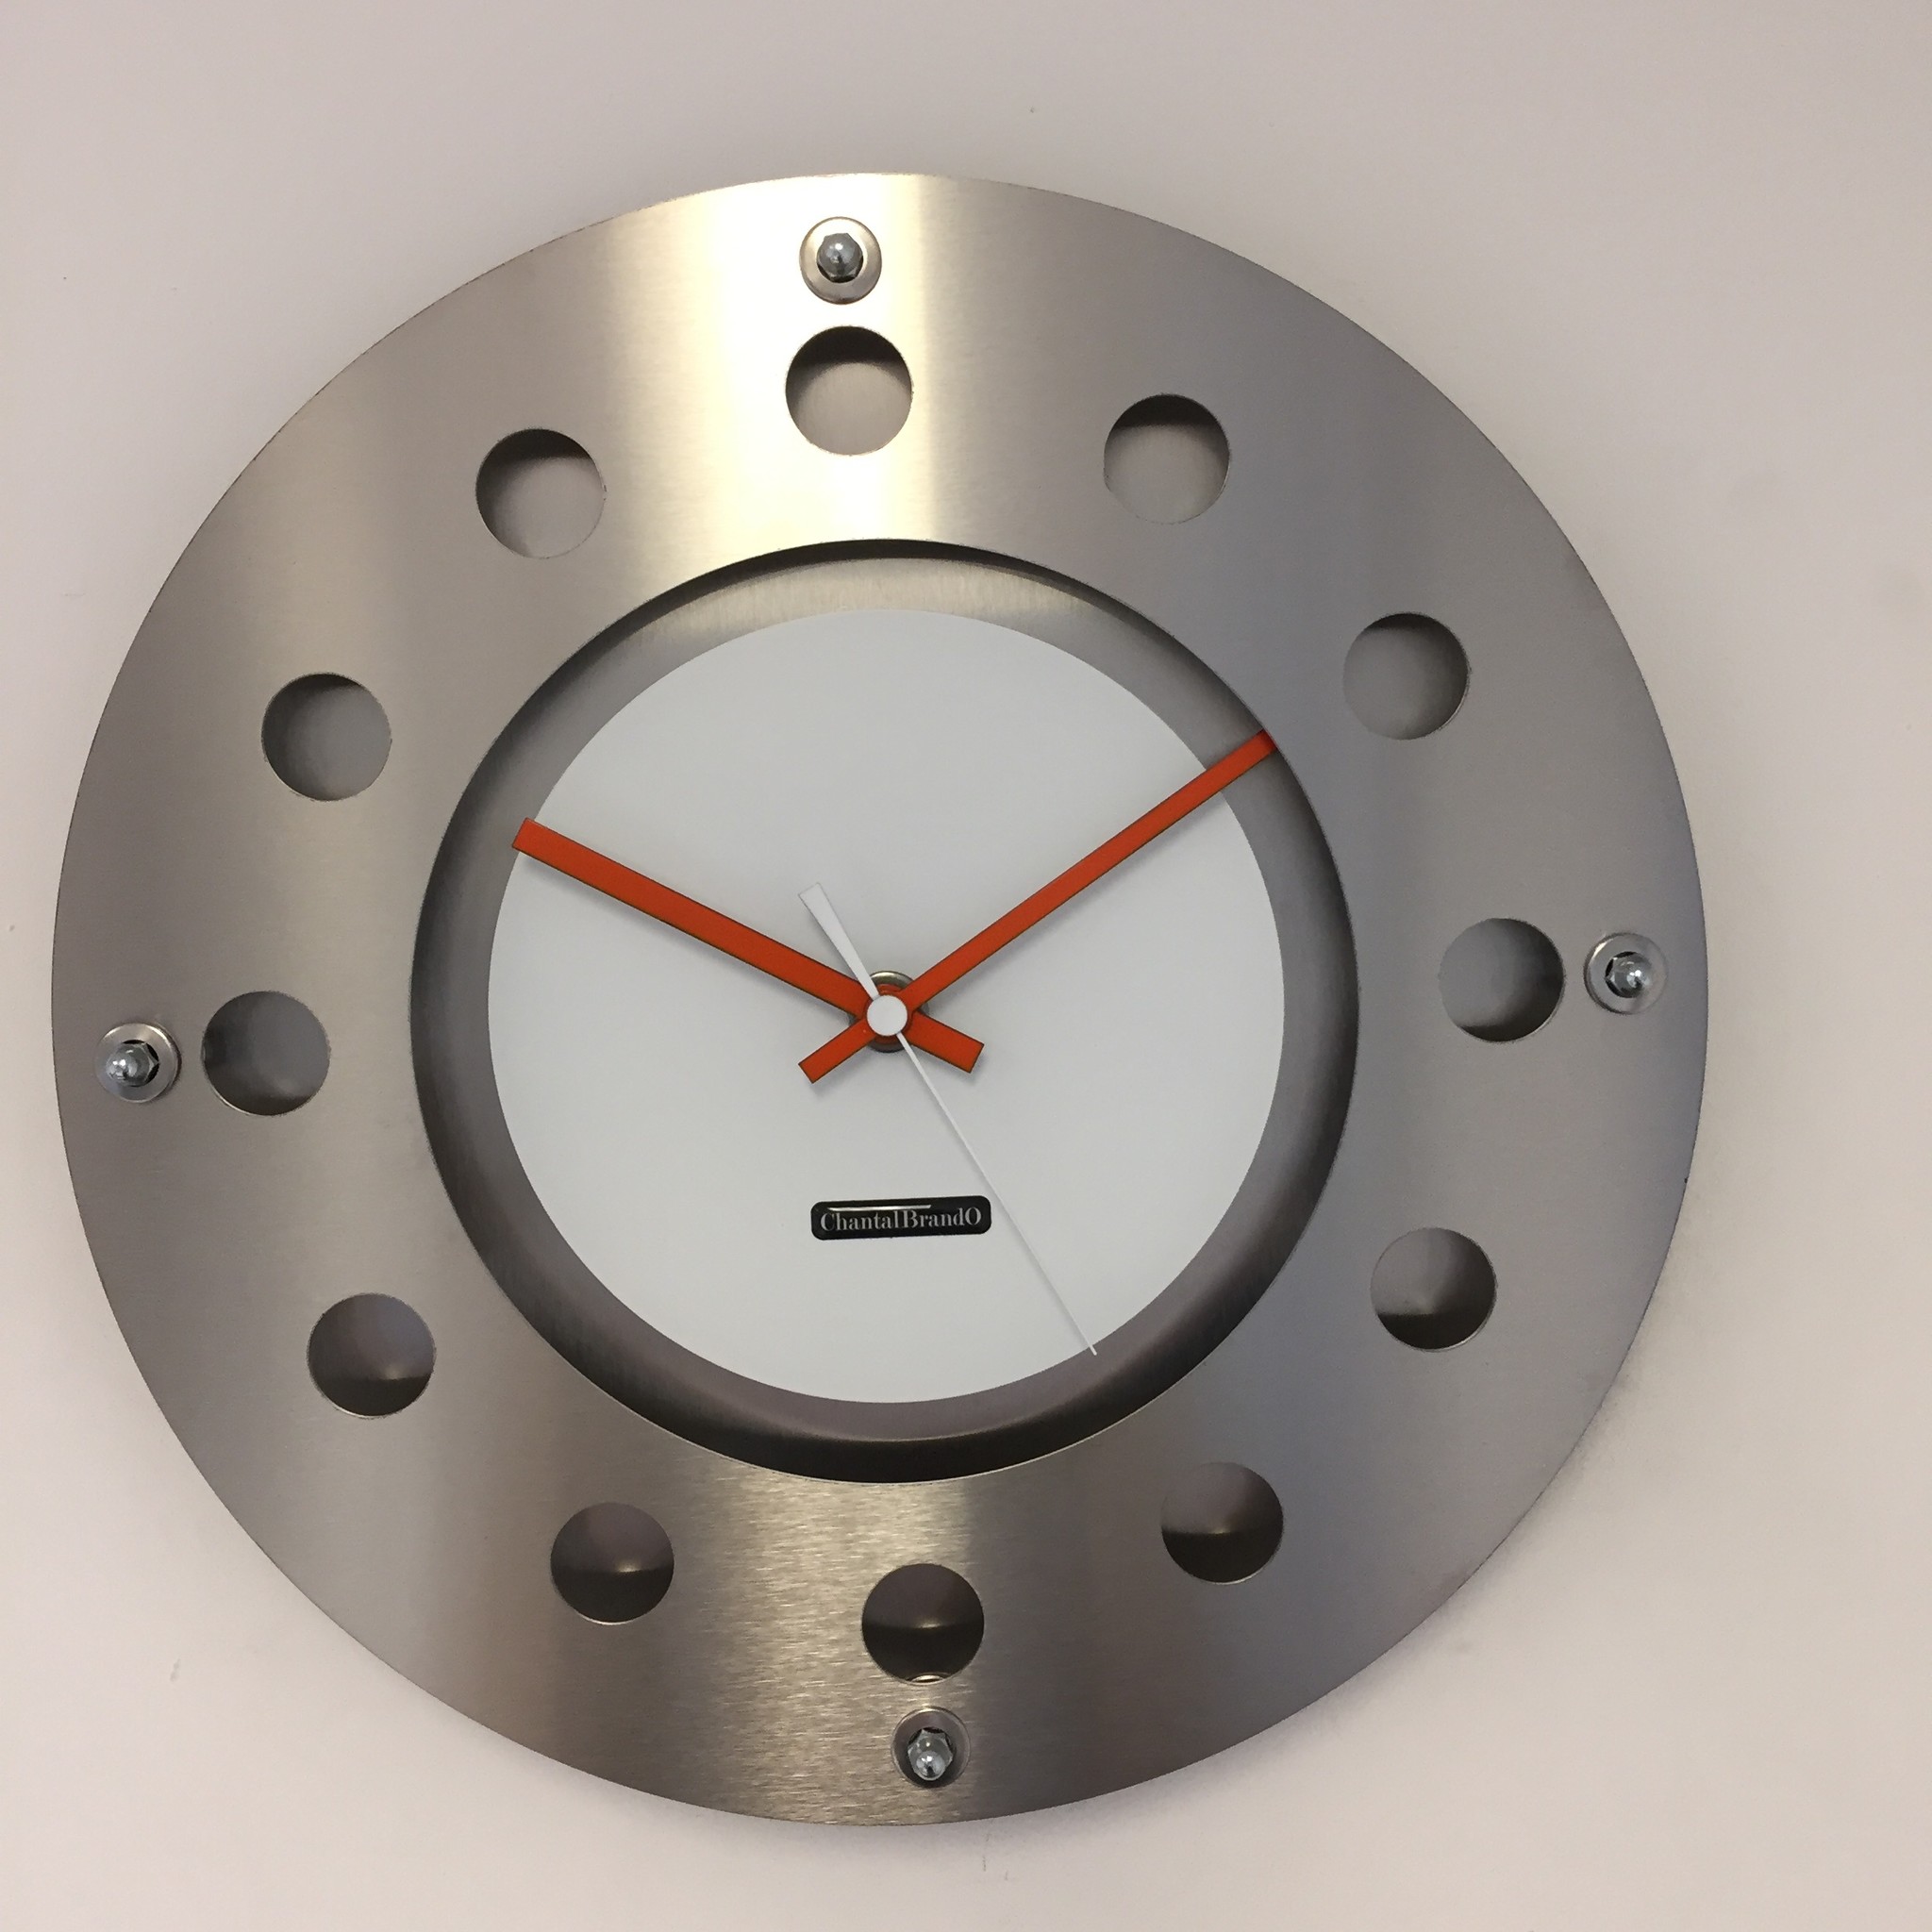 ChantalBrandO Design - Wall clock Mecanica Small Indoor Circle White Orange White Modern Dutch Design Handmade 40 cm